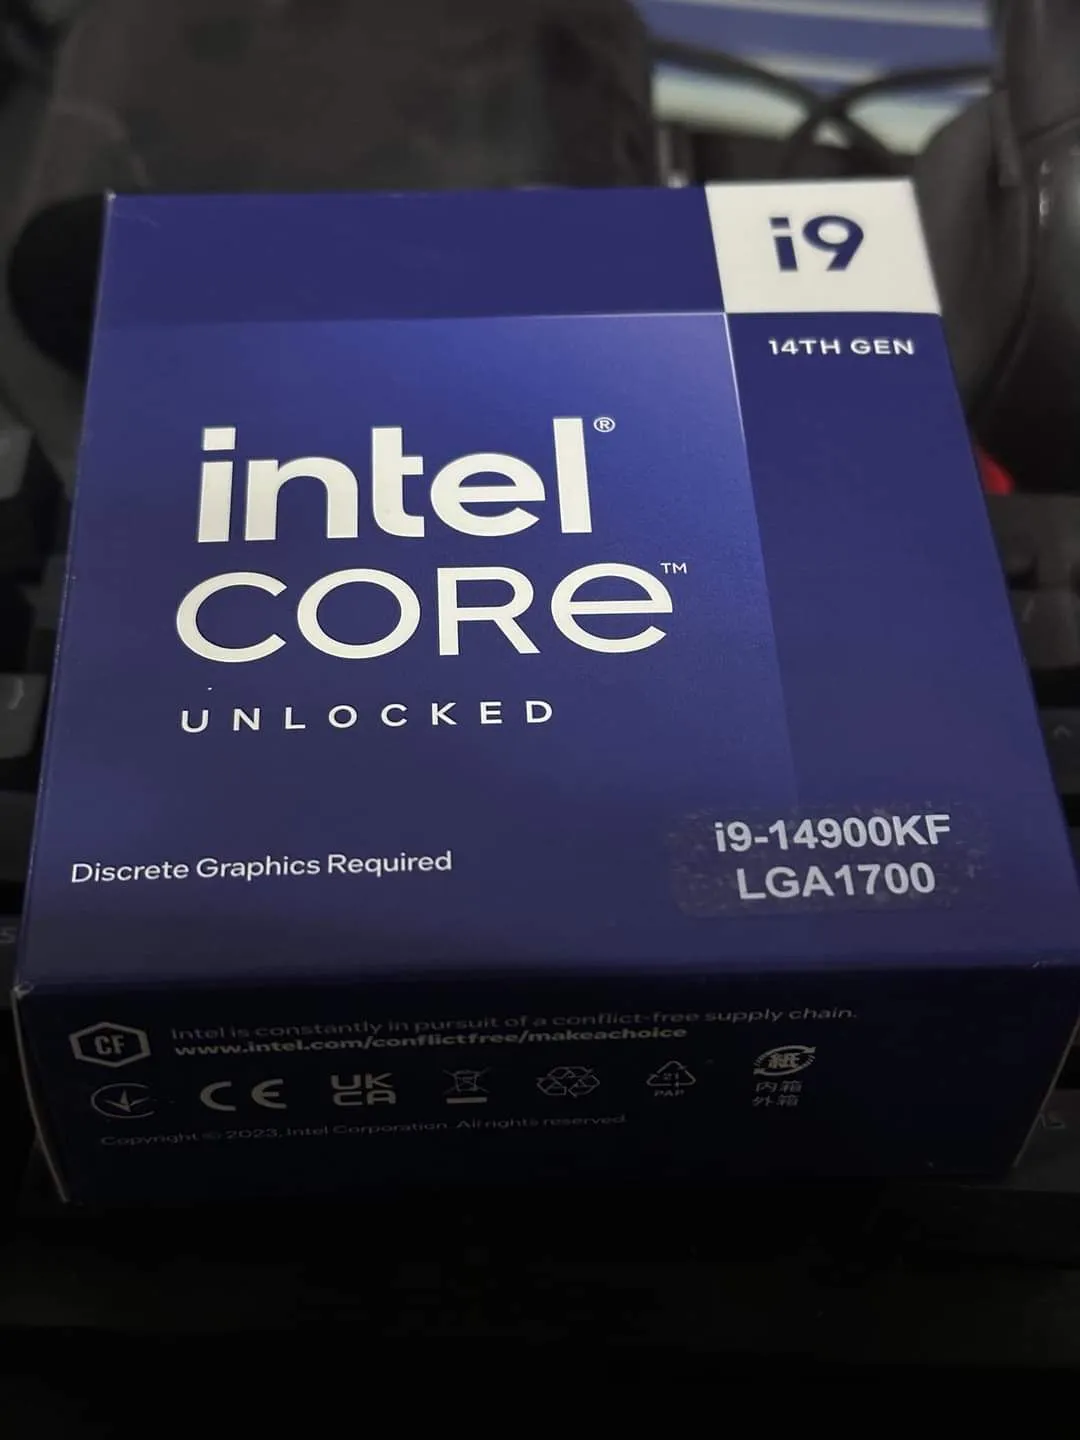 Intel Core i9-14900K Packaging Revealed